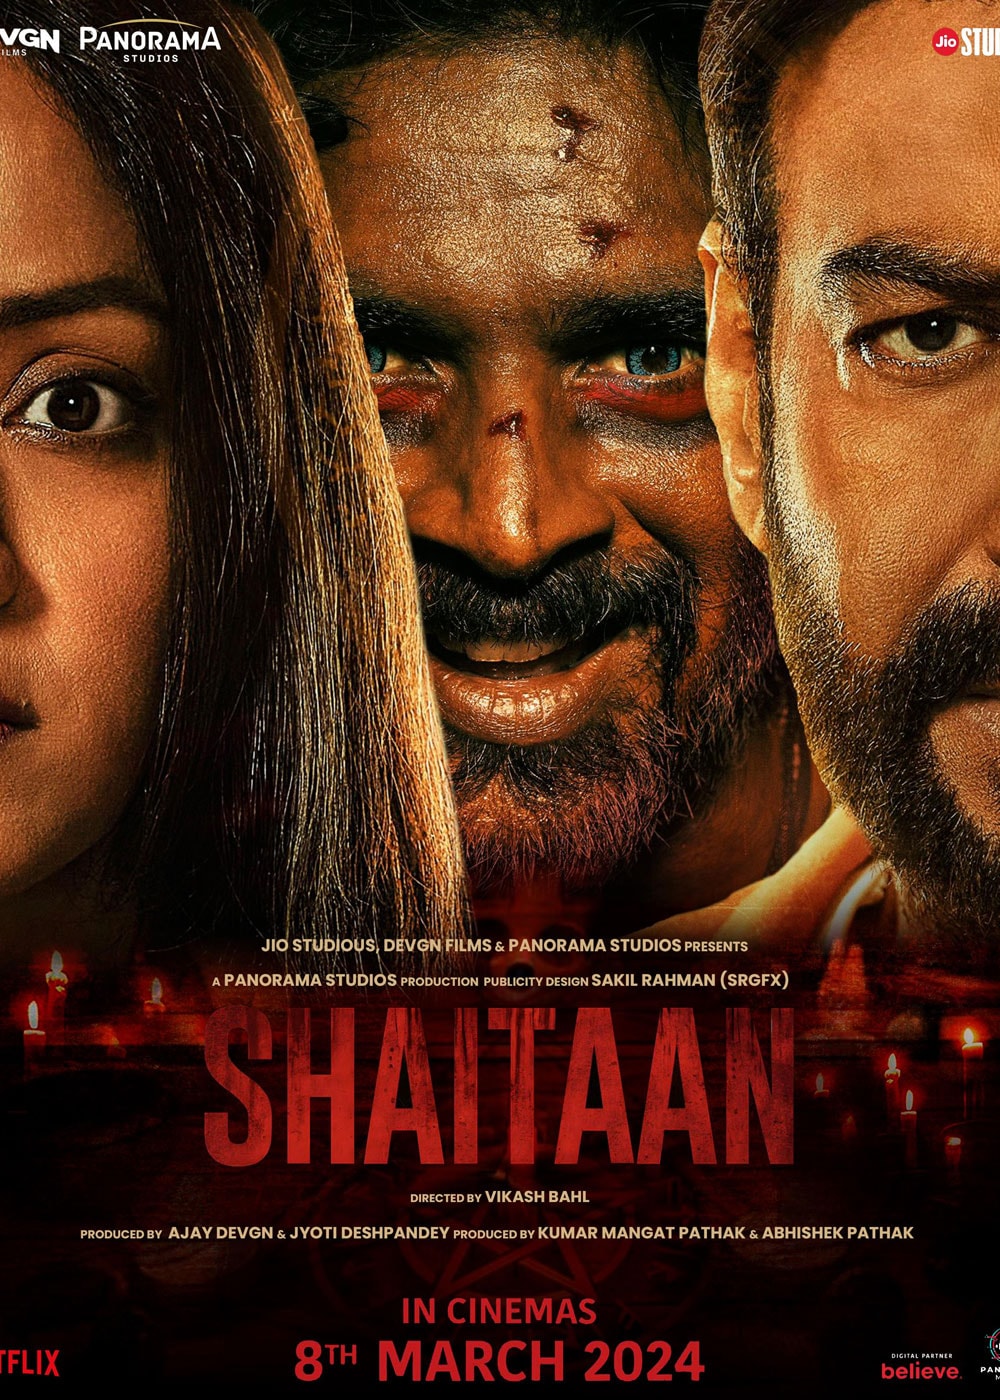 Shaitaan Movie (2024) | Release Date, Review, Cast, Trailer - Gadgets 360